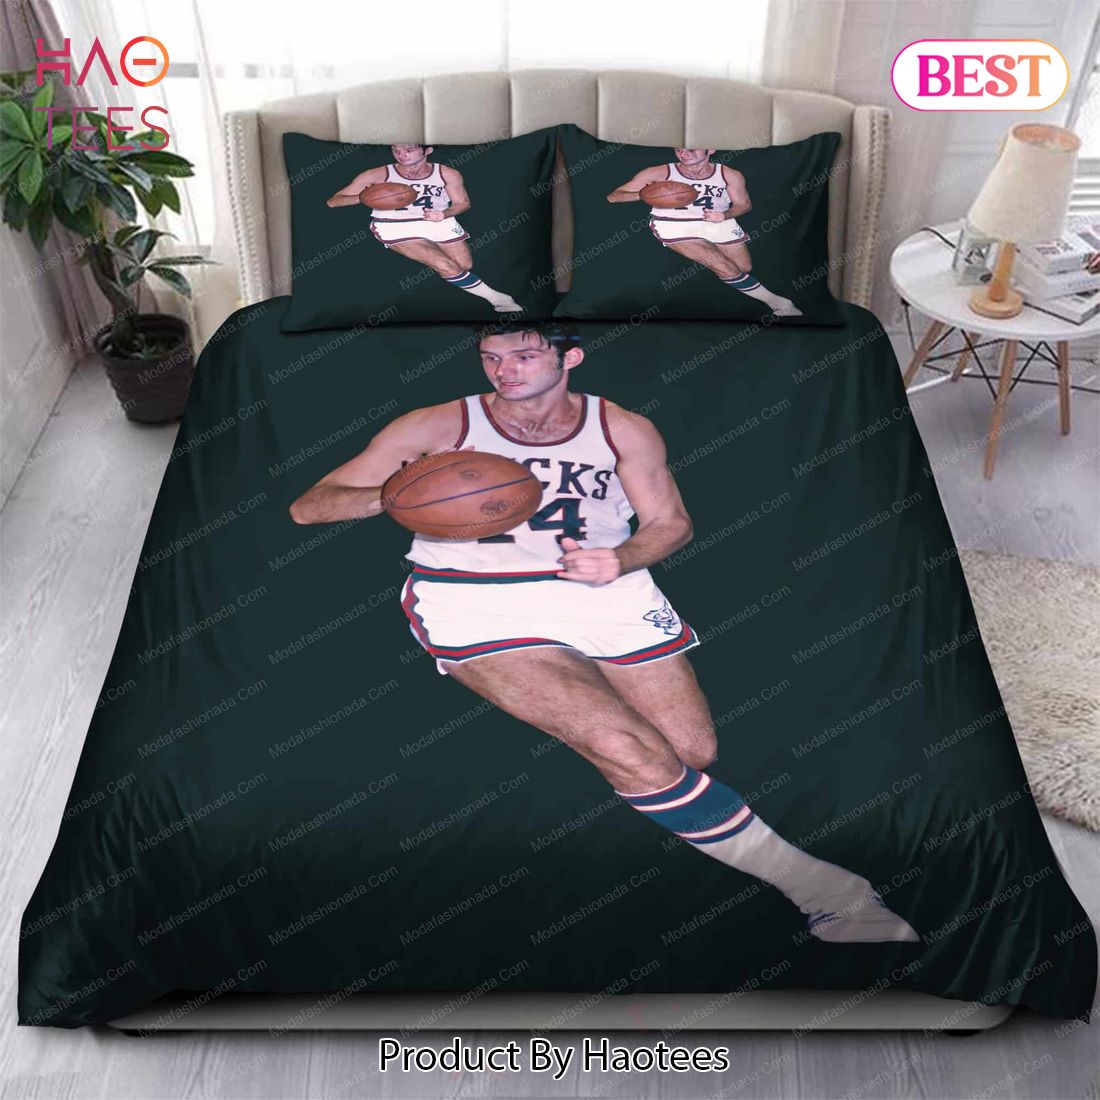 Buy Jon McGlocklin Milwaukee Bucks NBA 64 Bedding Sets Bed Sets, Bedroom Sets, Comforter Sets, Duvet Cover, Bedspread